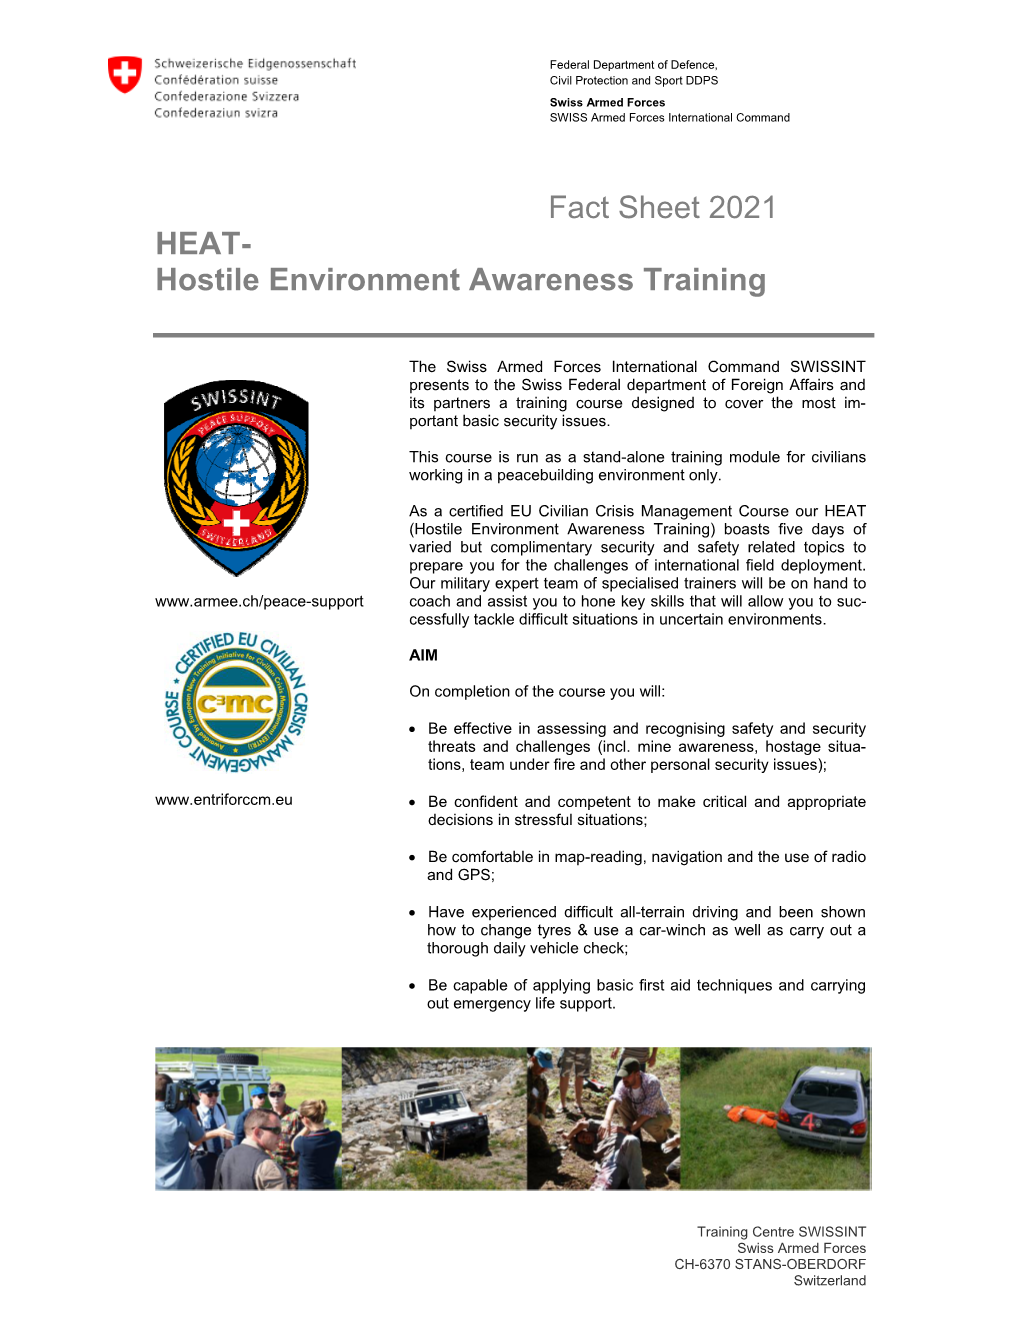 Fact Sheet 2021 HEAT- Hostile Environment Awareness Training